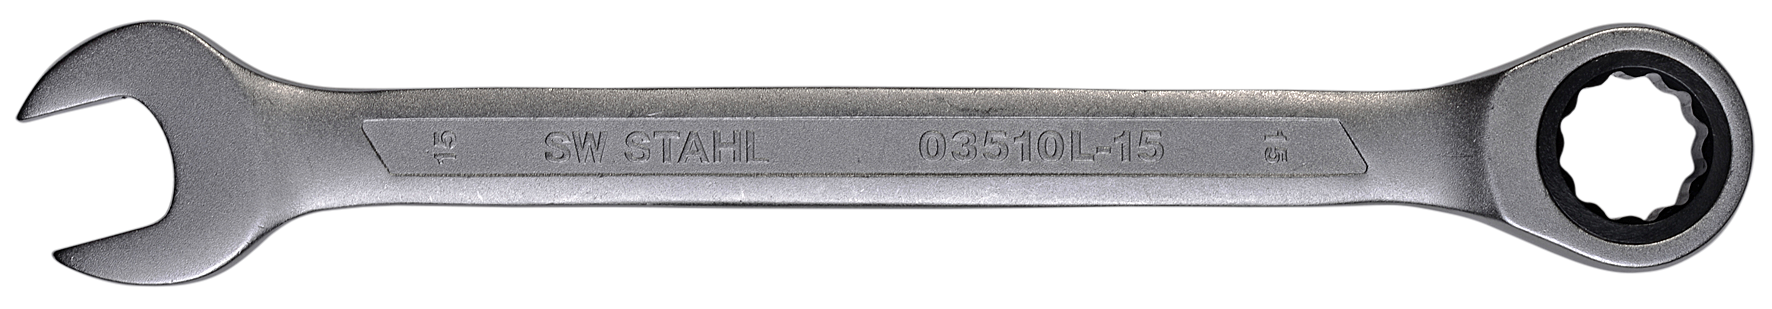 SW-STAHL 03510L-15 Gabelringratschenschlüssel, 15 mm